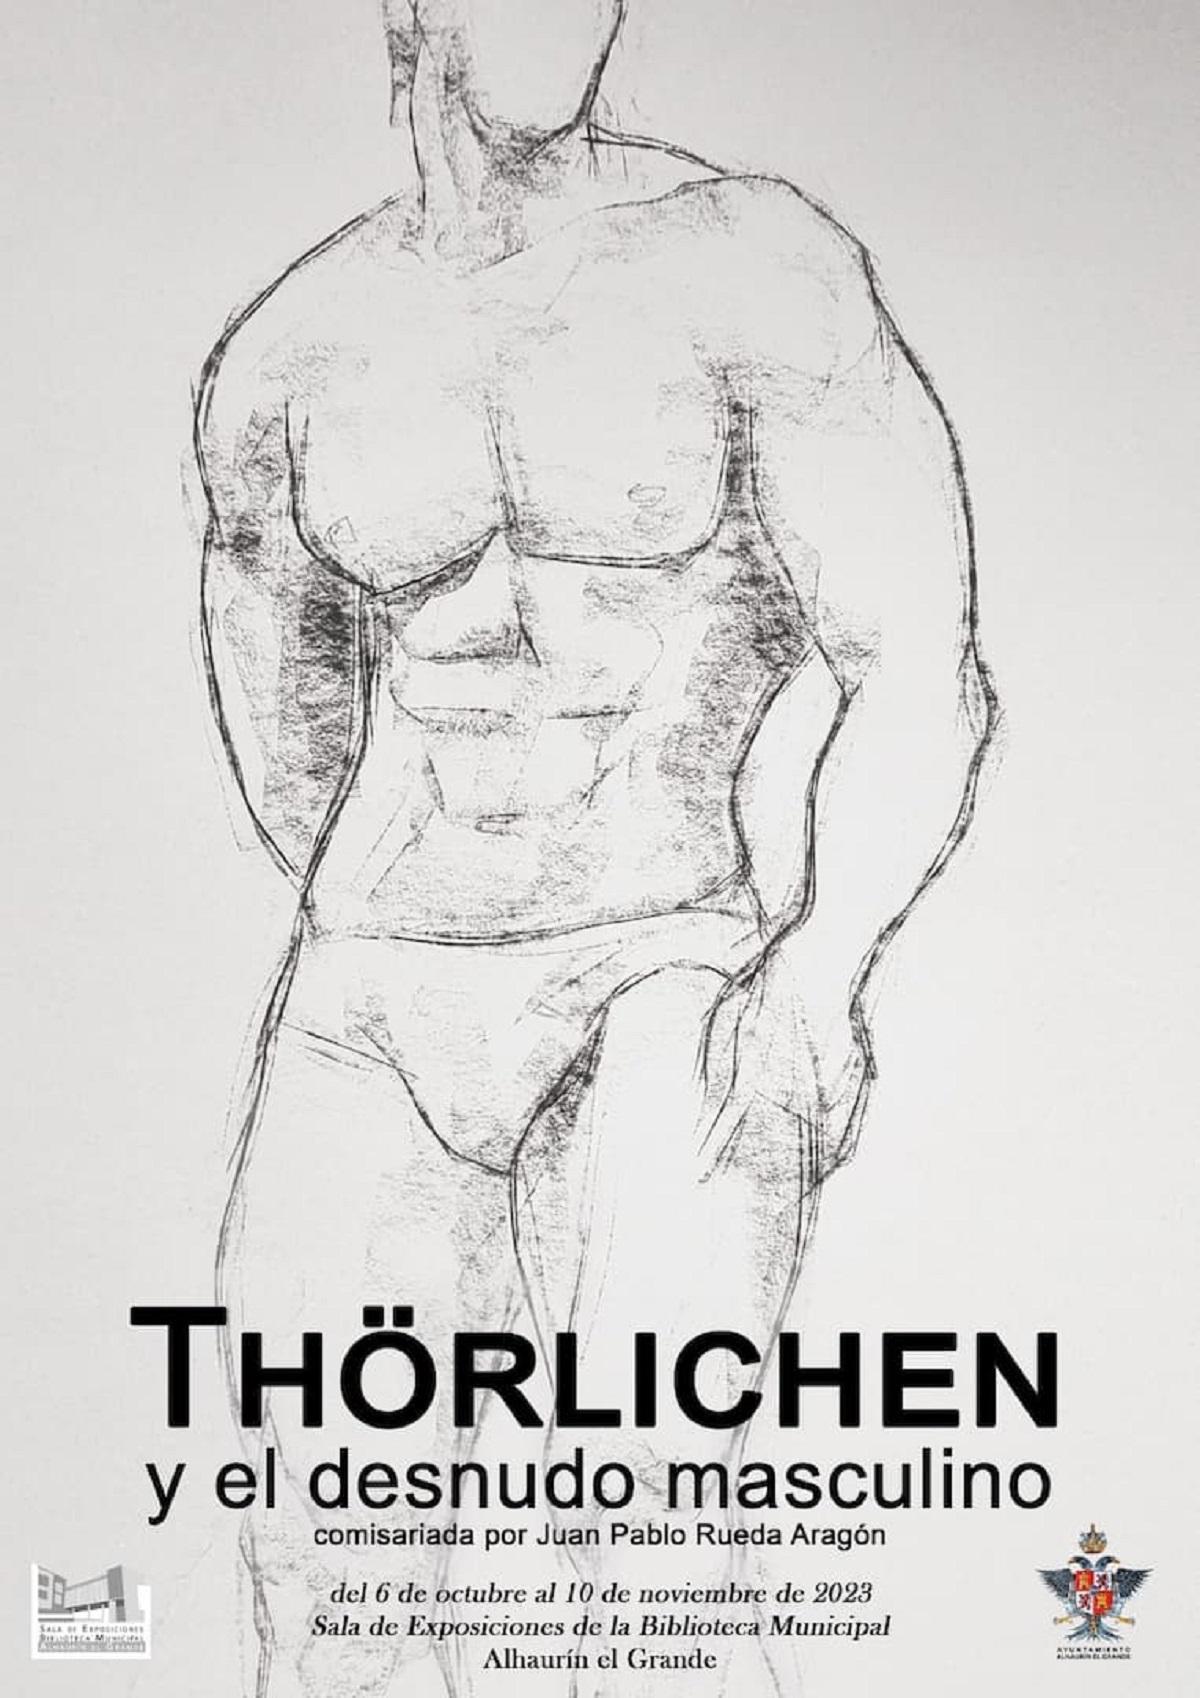 Thorlichen y el desnudo masculino.